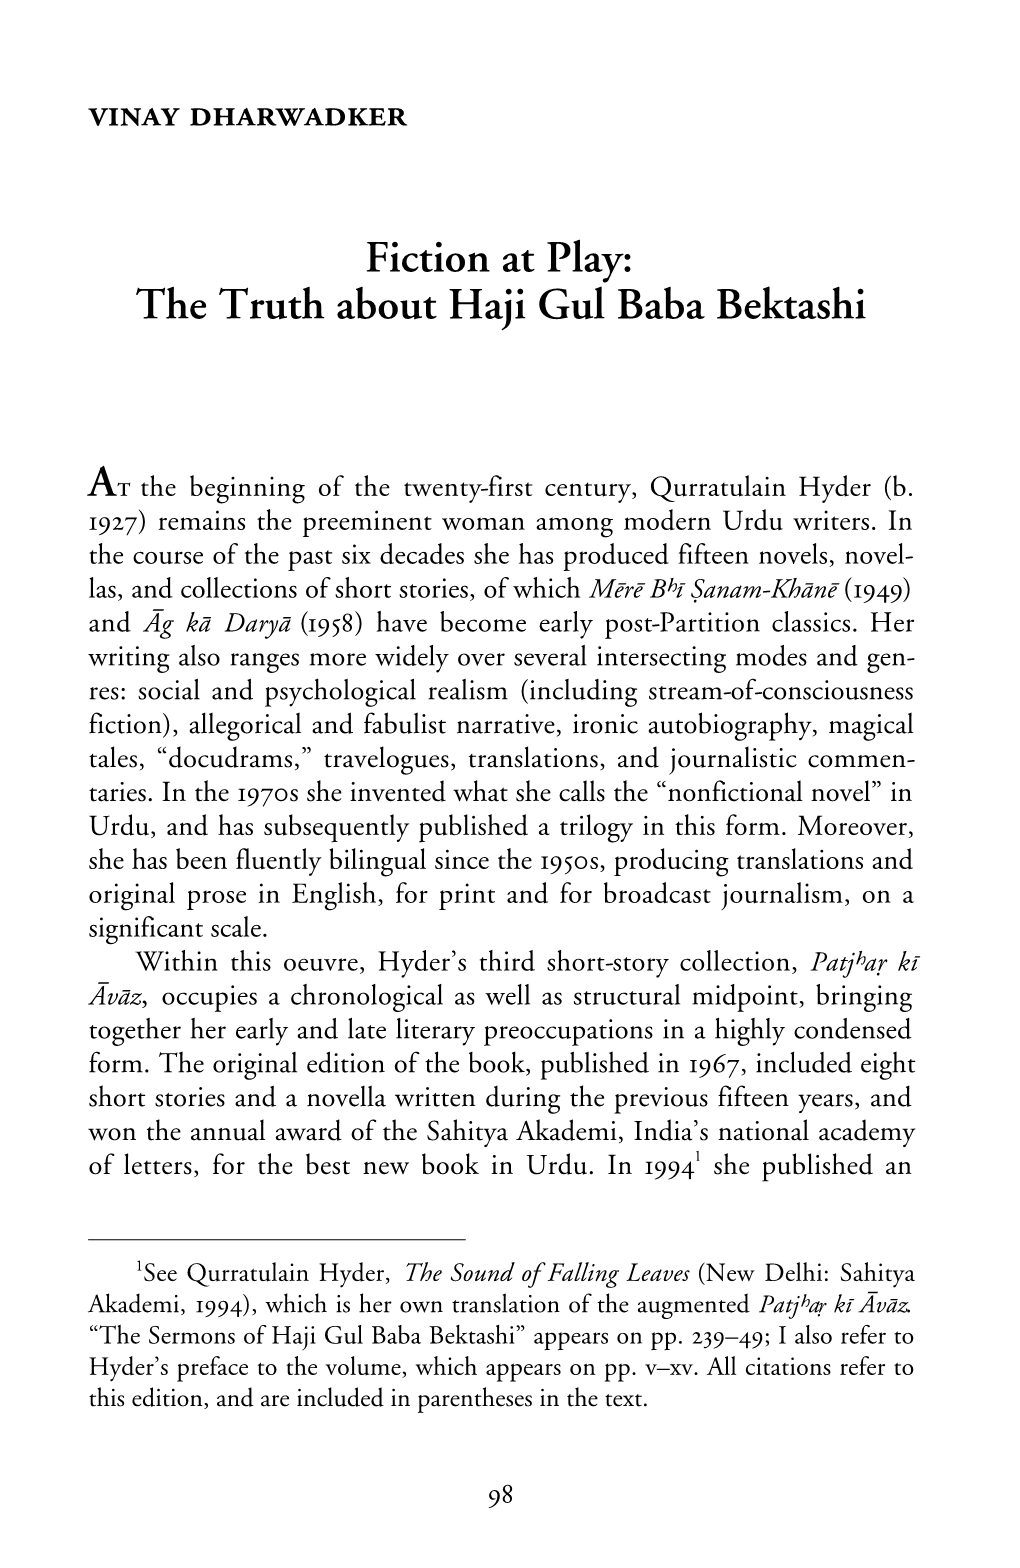 Fiction at Play: the Truth About Haji Gul Baba Bektashi